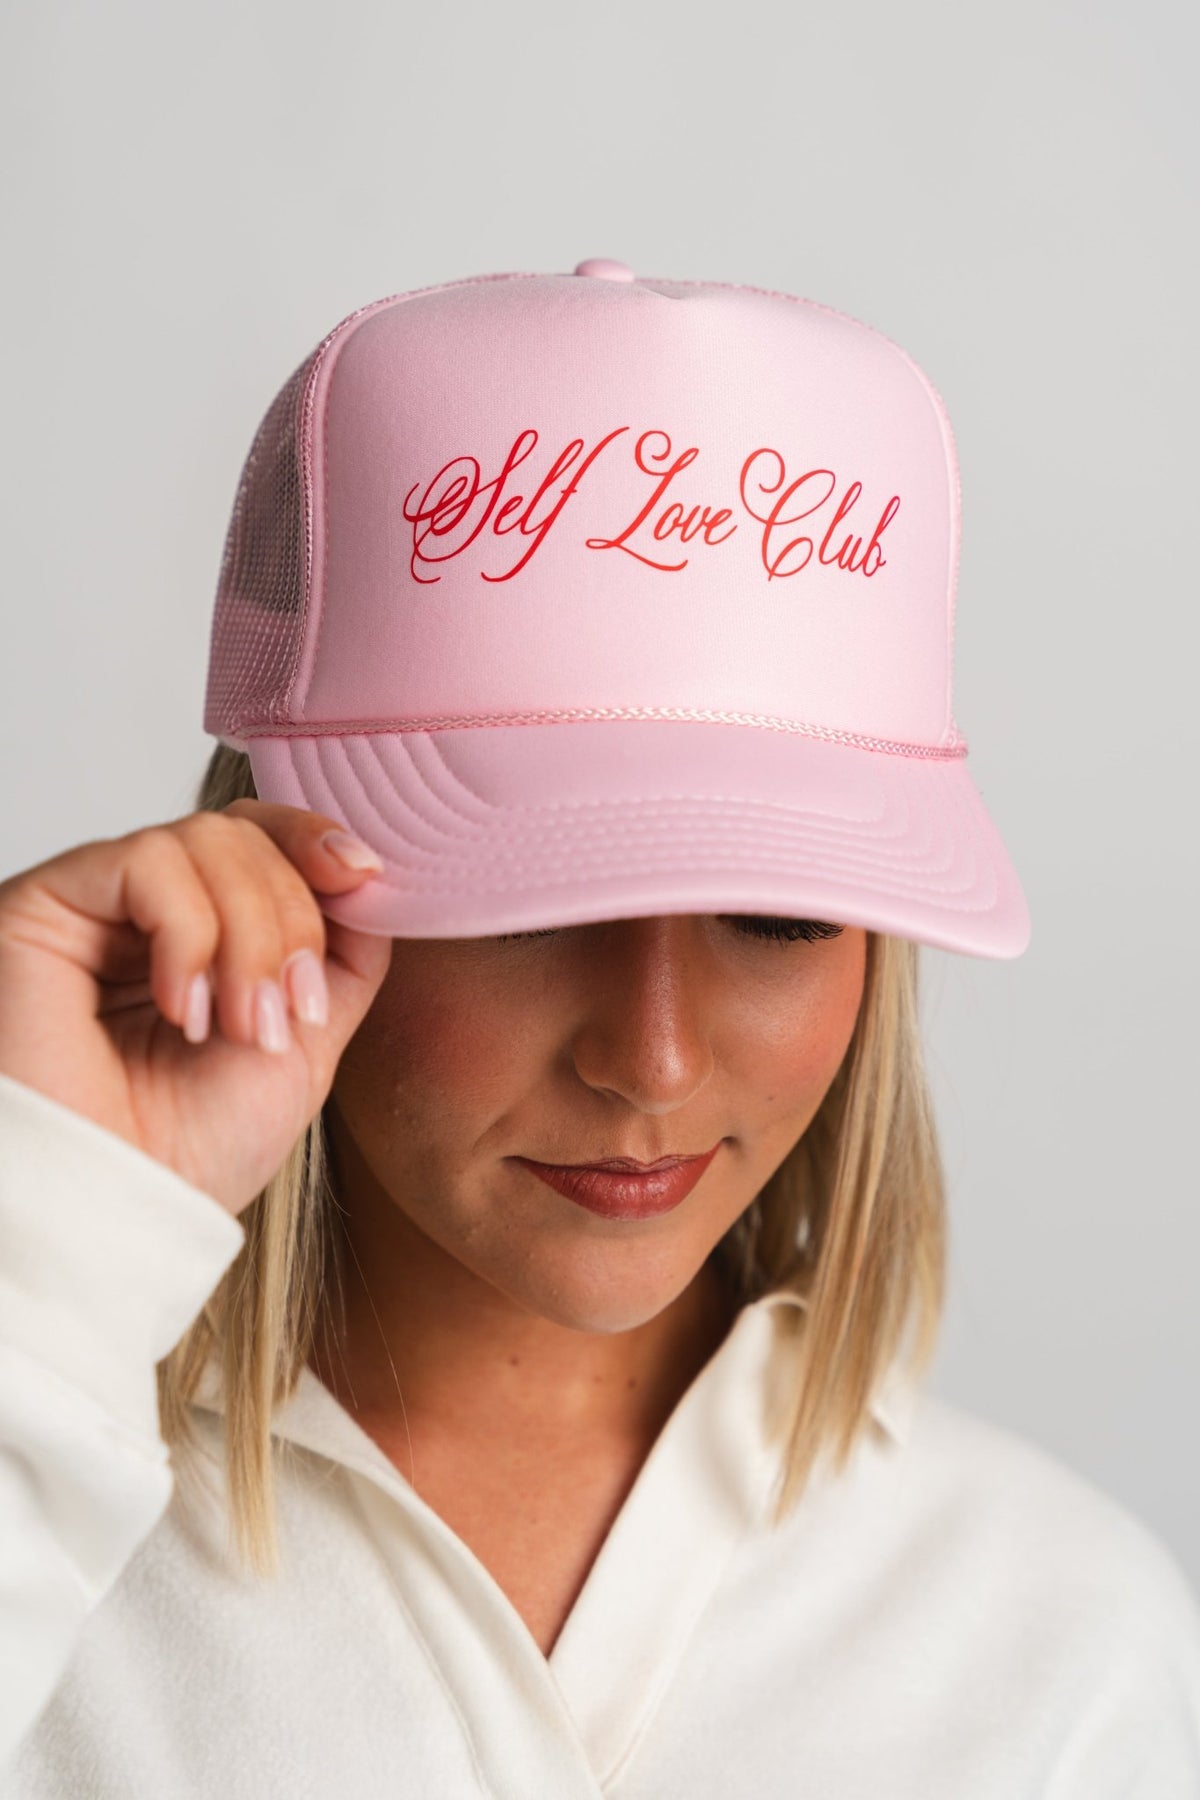 On my hot girl walk trucker hat light pink